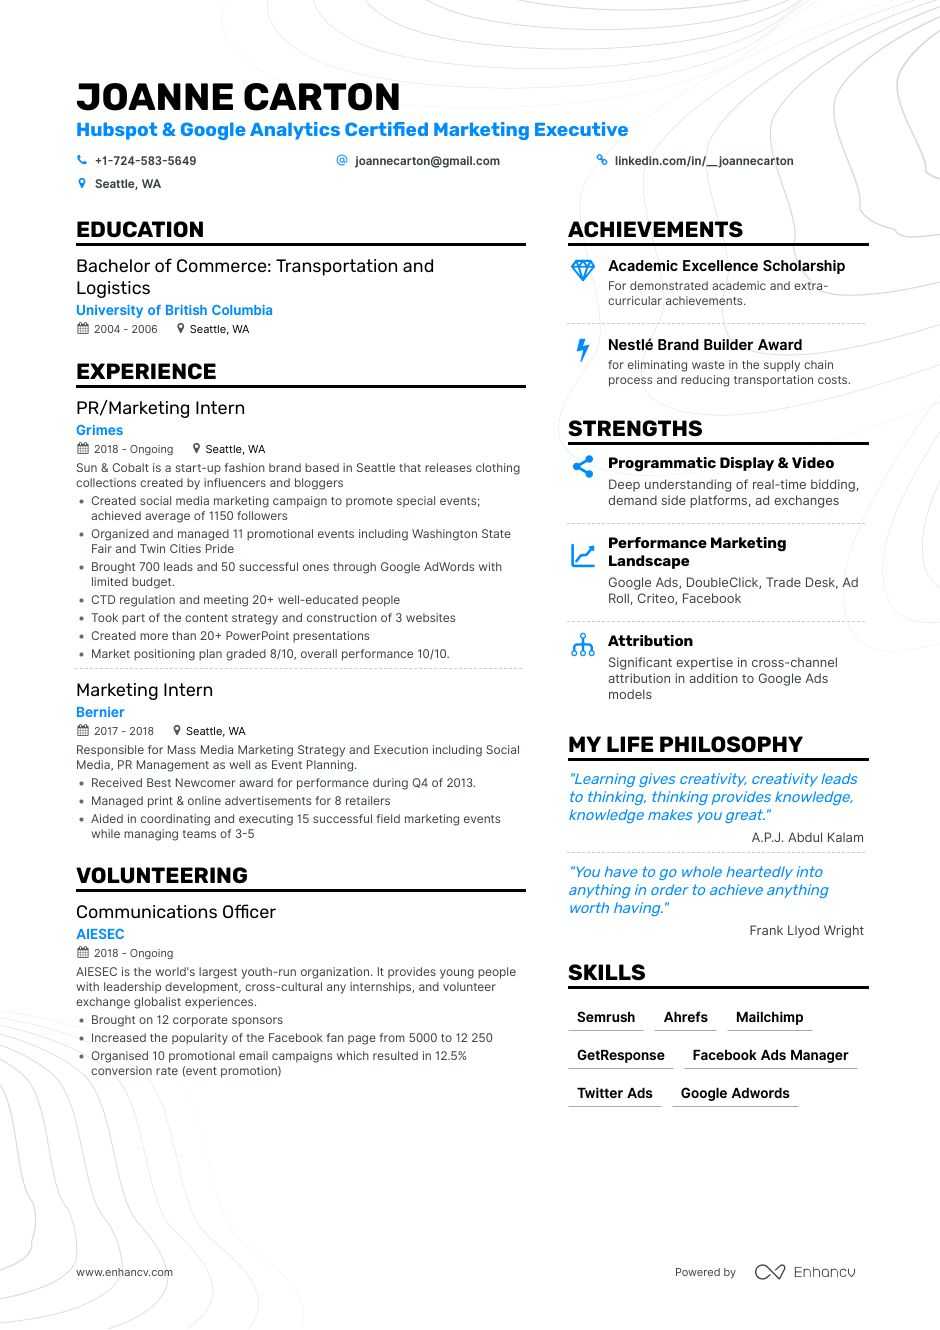 marketing-intern-resume-8-step-ultimate-guide-for-2021-enhancv